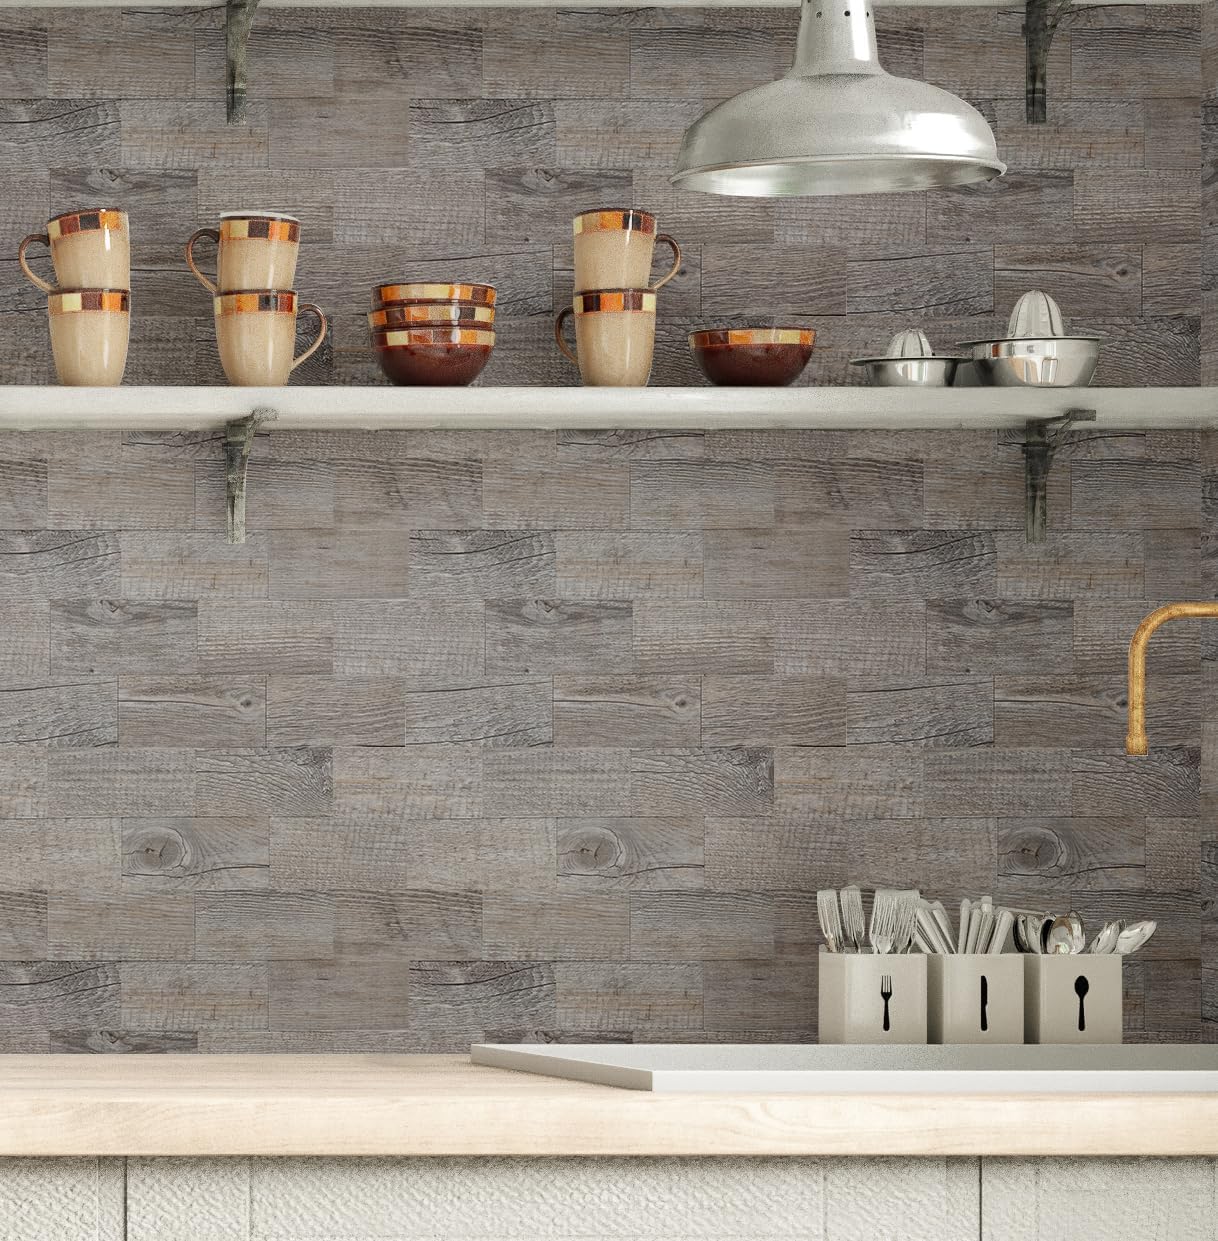 3" X 6"  PVC backsplash tile for kitchen in Gray Rustic lifestyle image